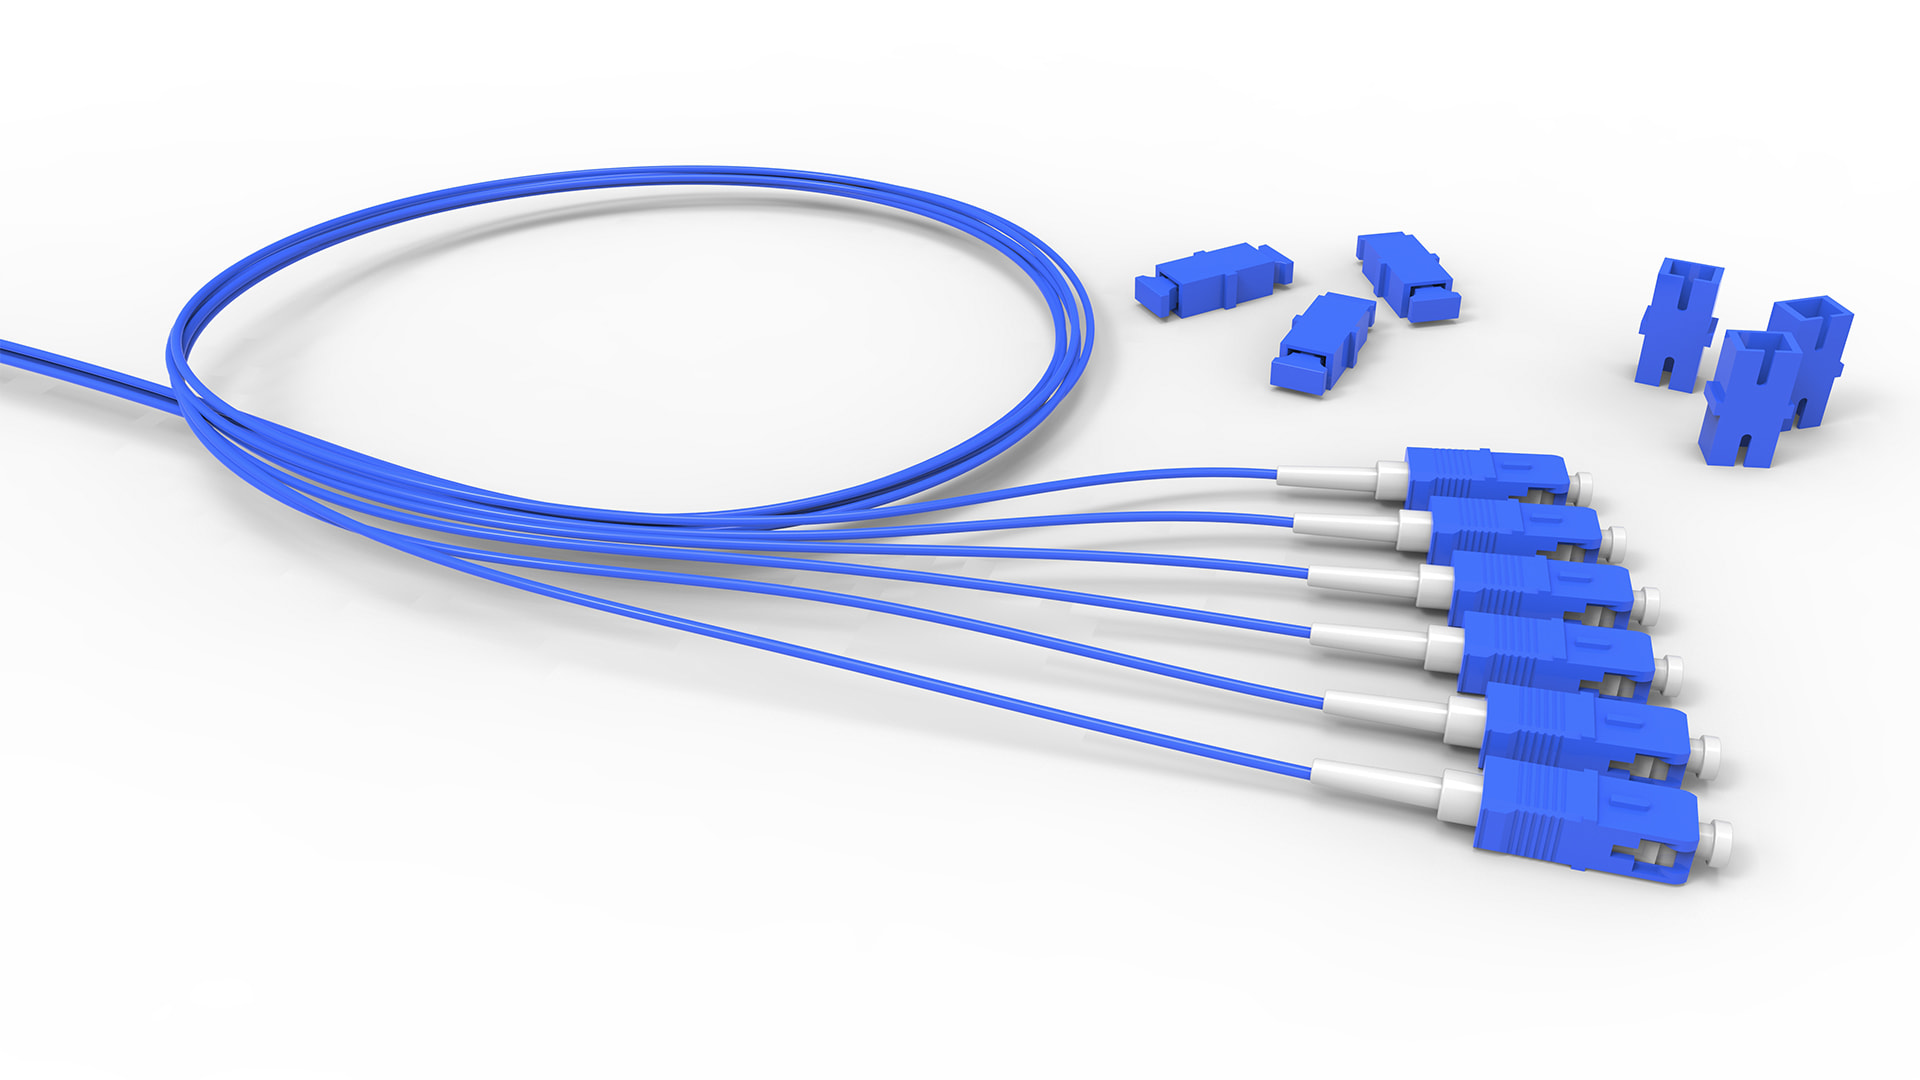 Cable Fibra Optica Para Modem Internet Sc Apc - Sc Upc 20 Mt